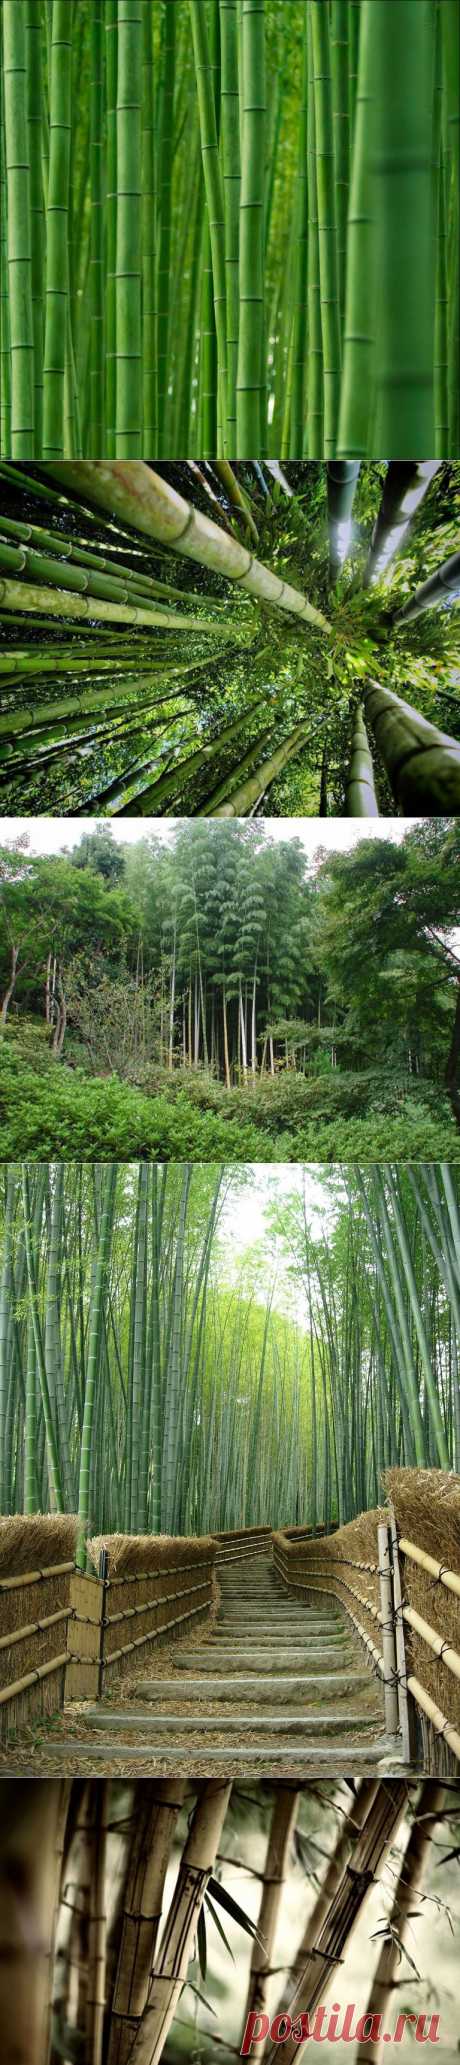 Бамбуковый лес в Киото - Фотоблог Klimbo.ru - Взгляни на мир!